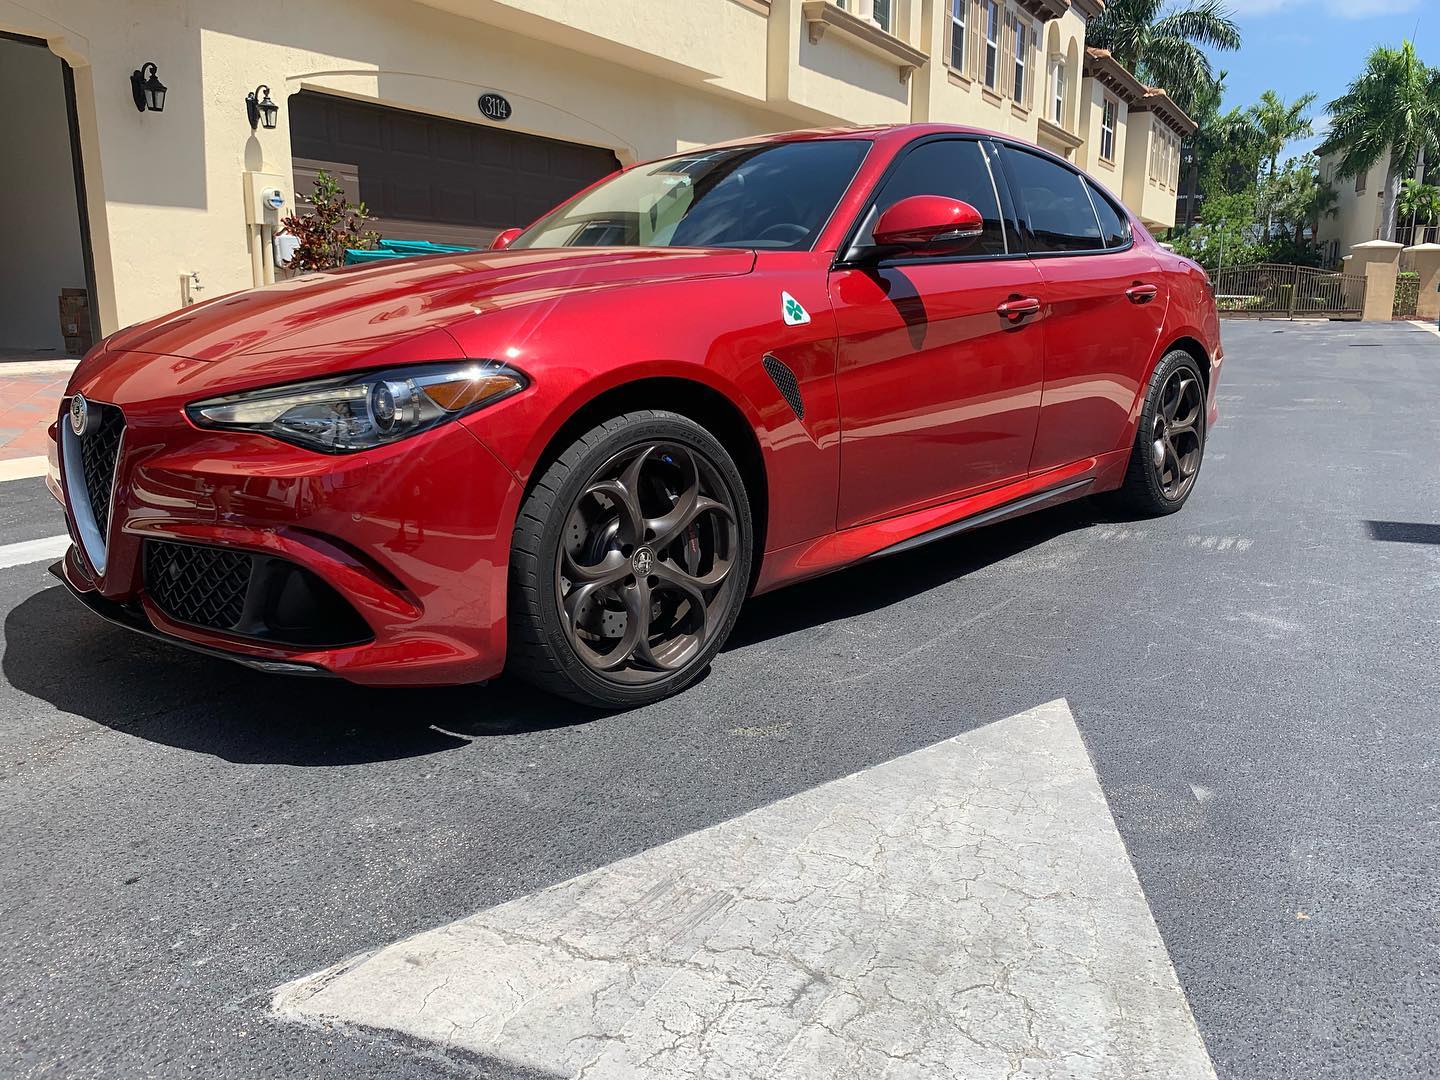 Custom K40 Police Laser Jammers and Hidden Radar Receiver Profile Installed on New 2019 Alfa Romeo Romeo Giulia Quadrifoglio in Boca Raton, FL